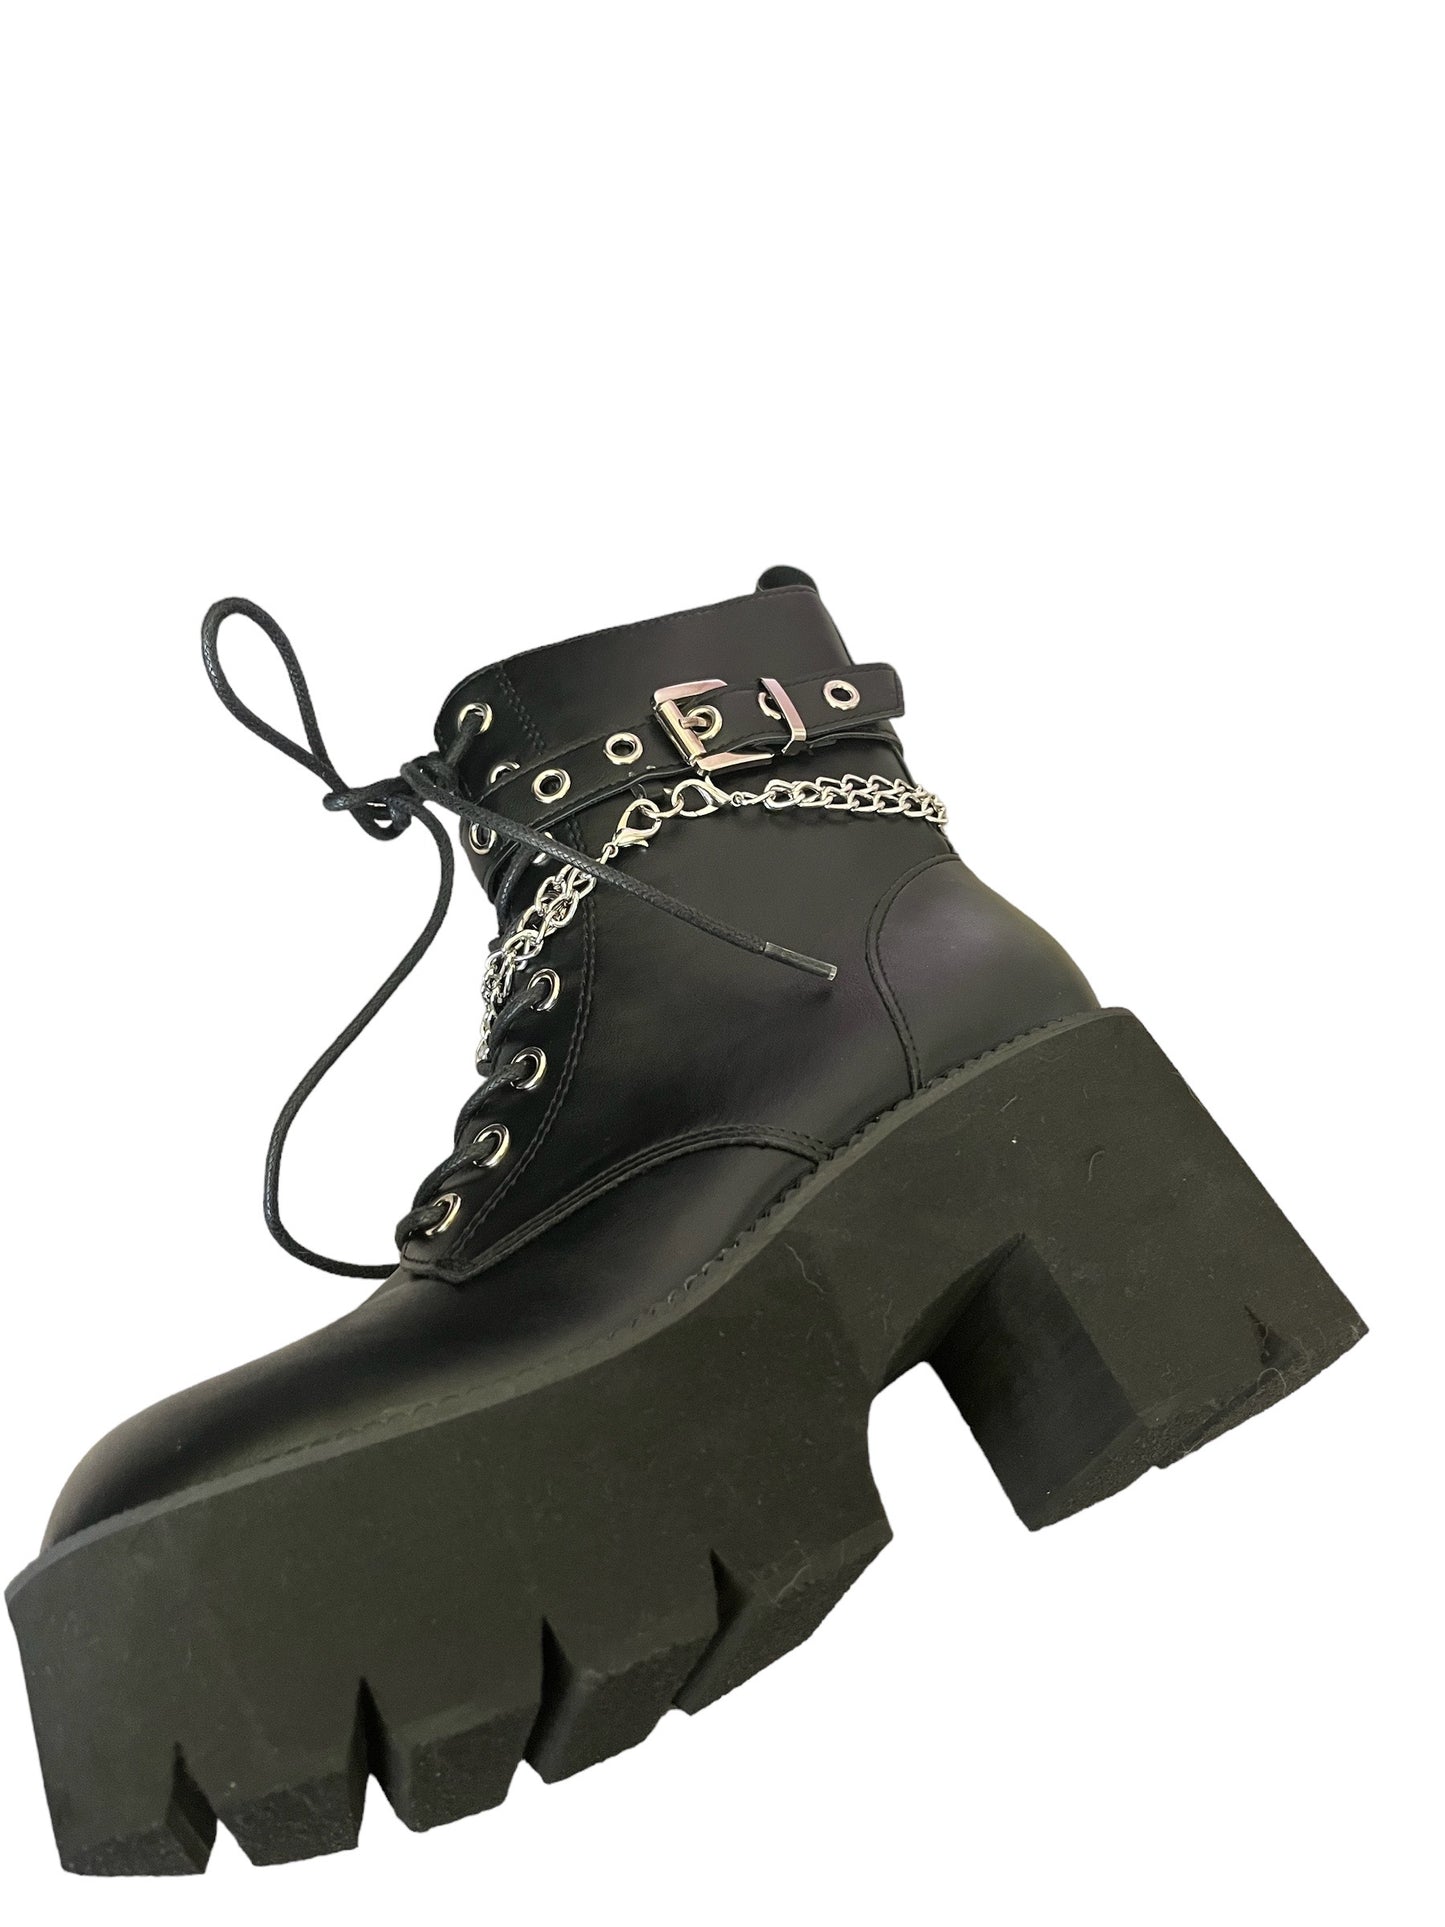 Black Faux Leather Platform Chain Heel Boots